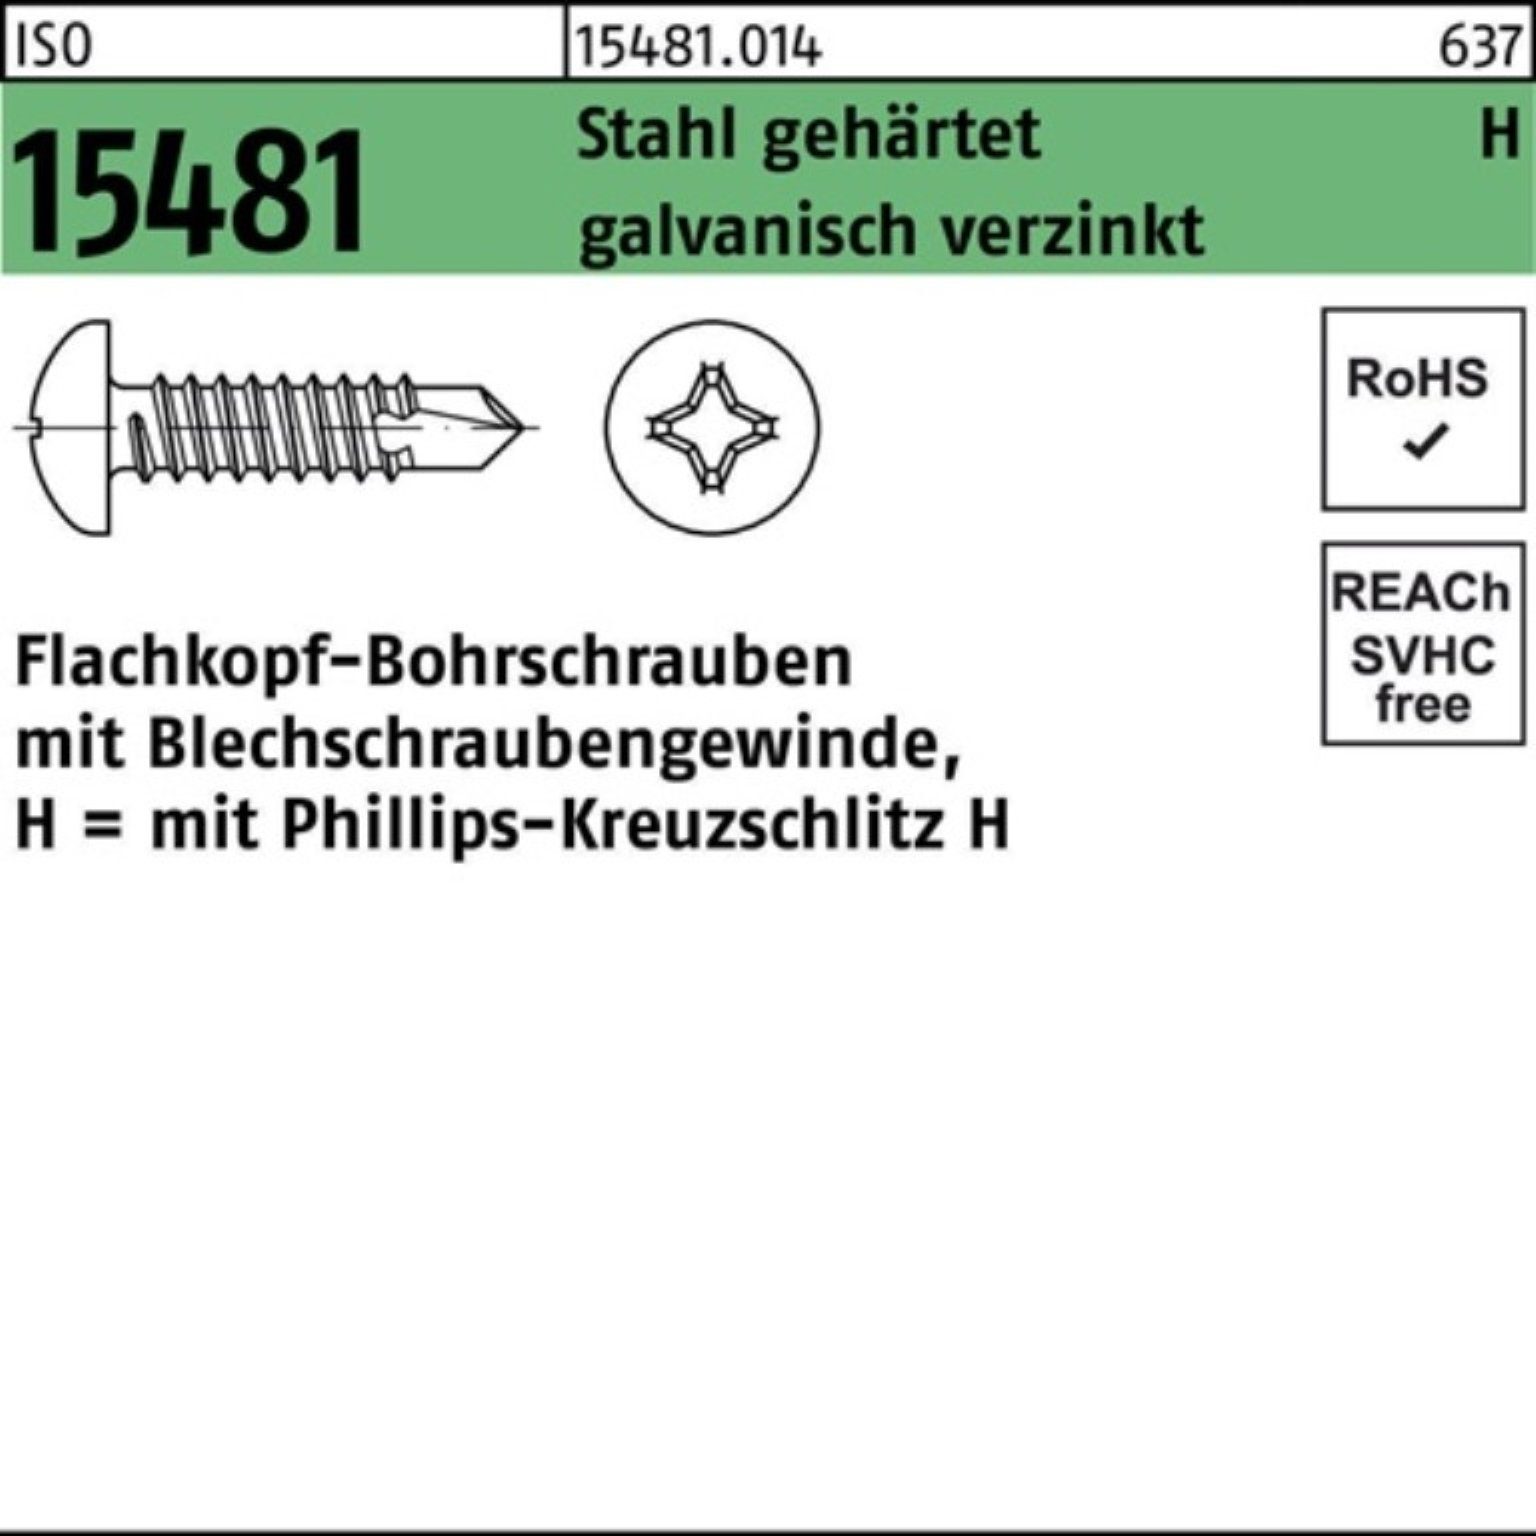 FLAKObohrschraube Reyher Stahl 3,5x19-H Bohrschraube PH Pack 1000er ISO 15481 ST gehärtet